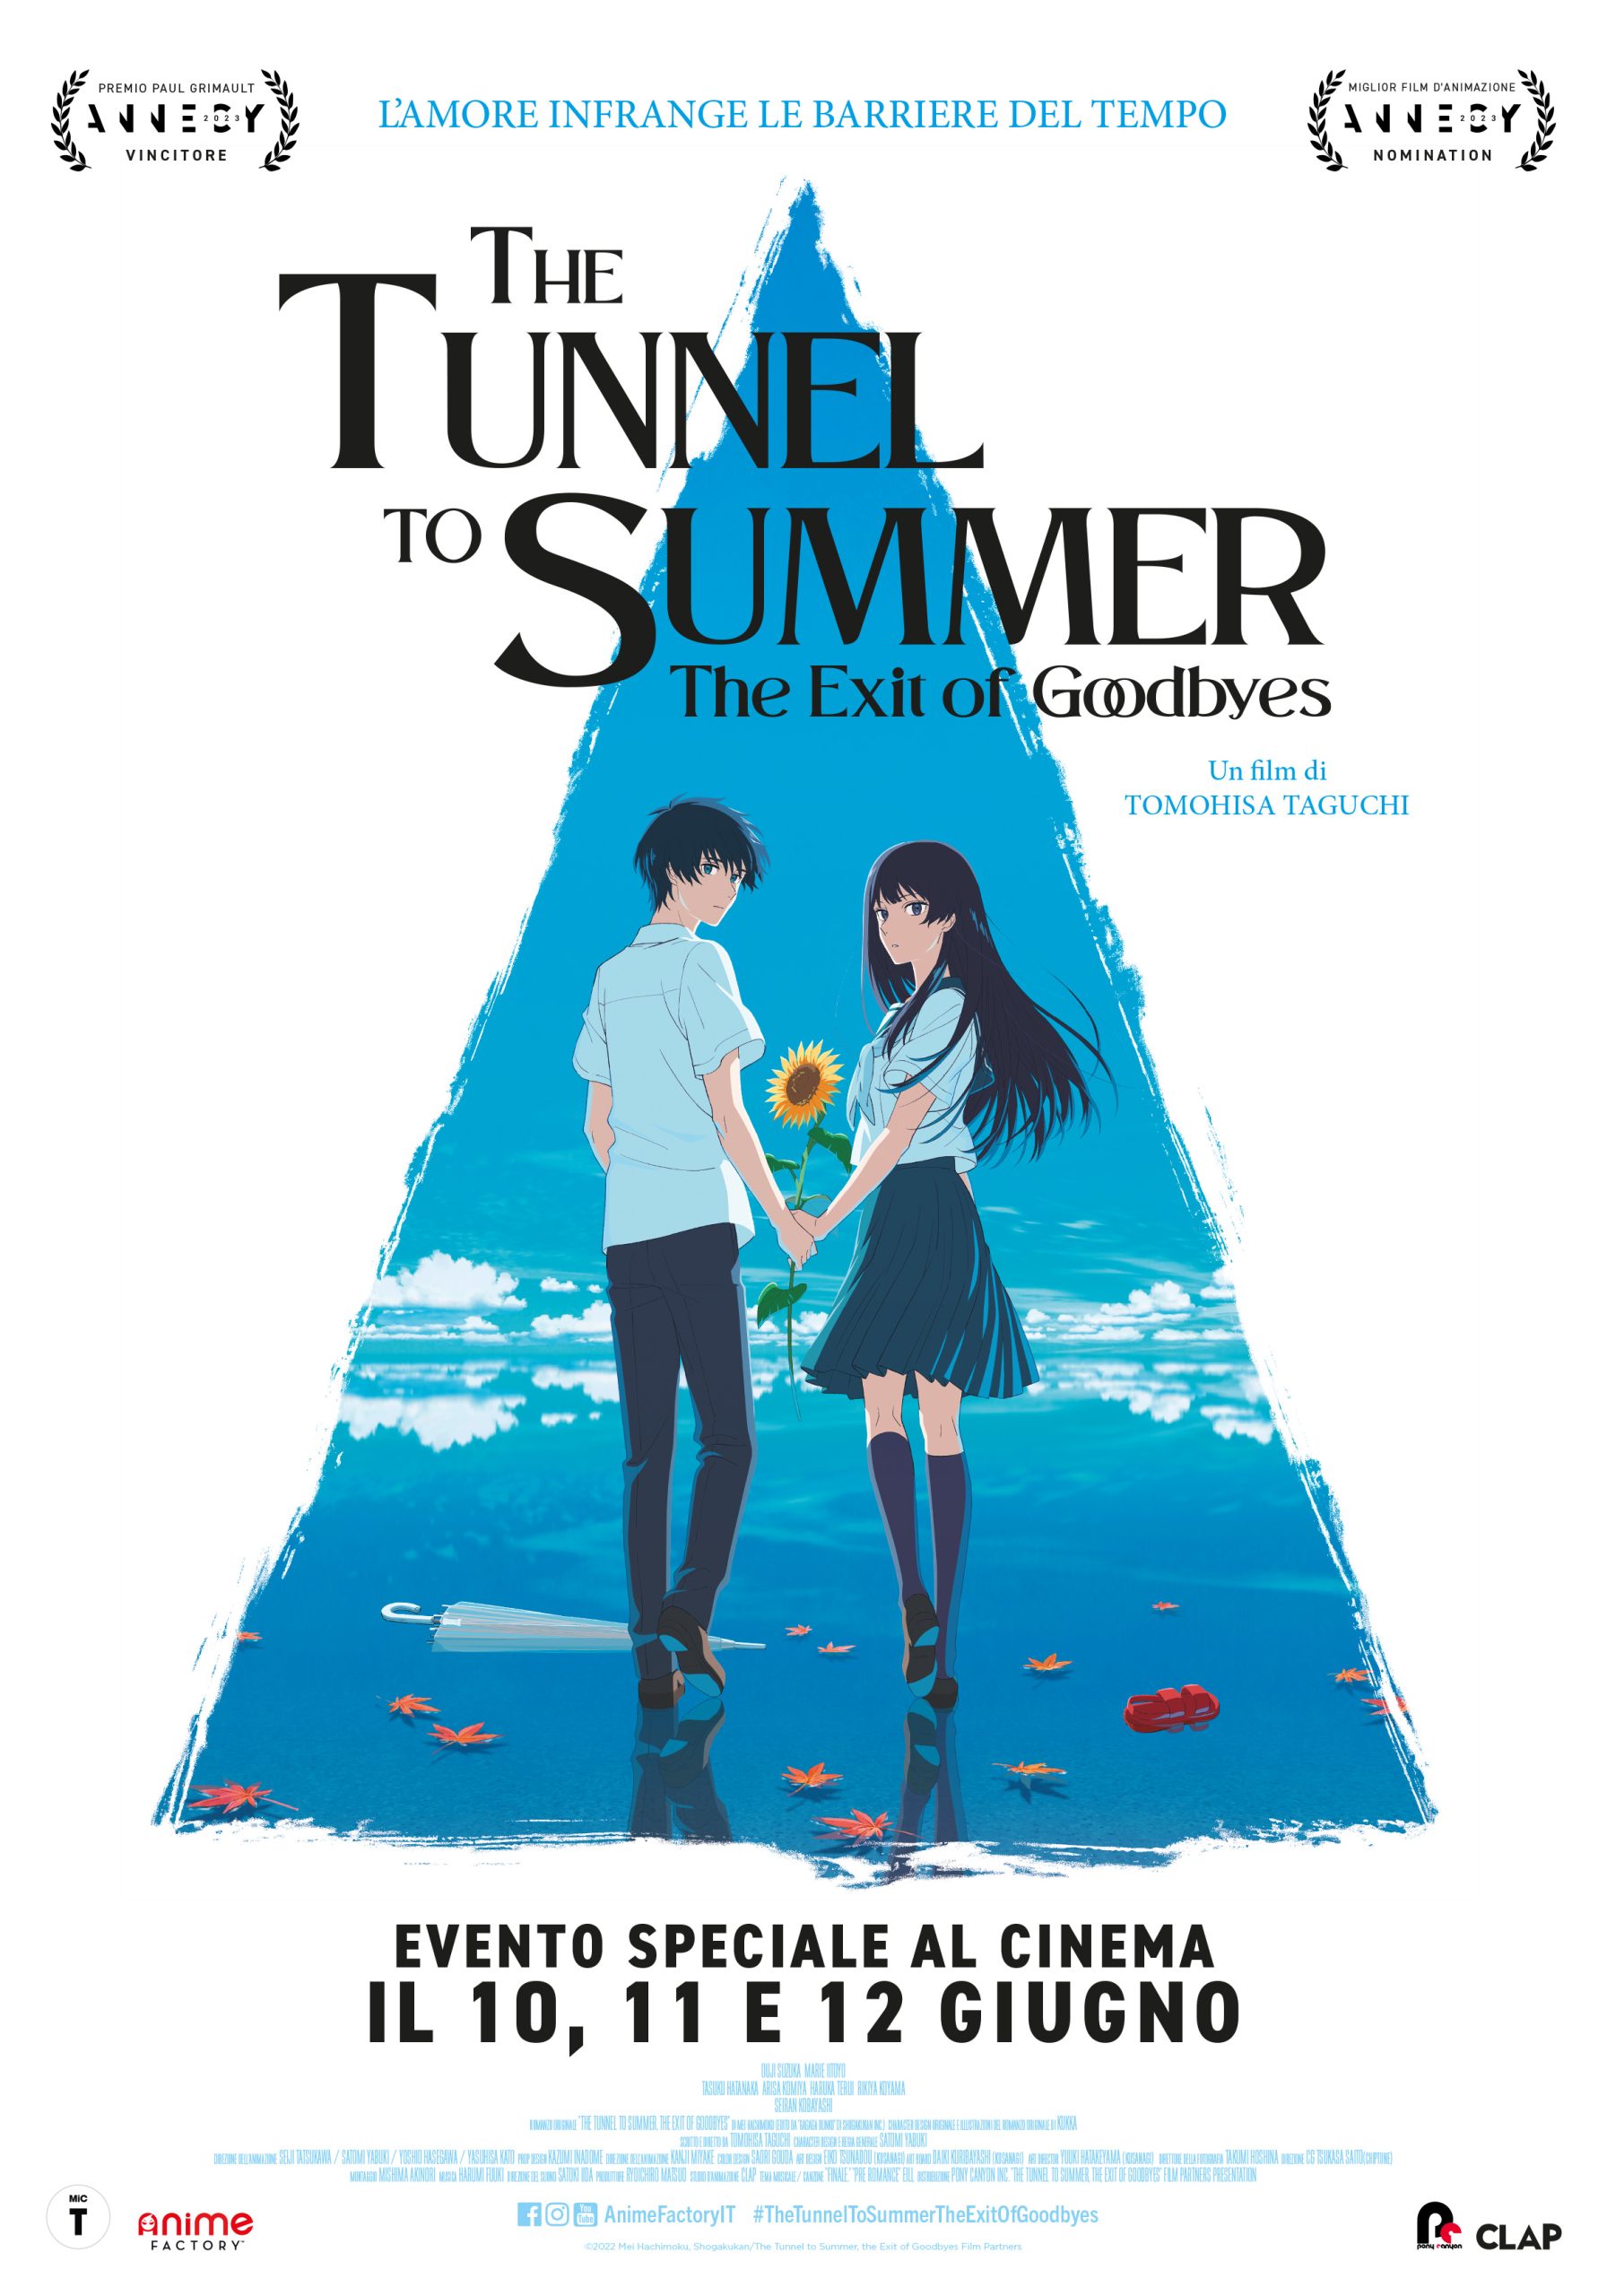 The Tunnel to Summer, the Exit of Goodbyes: svelato il poster italiano ufficiale del film